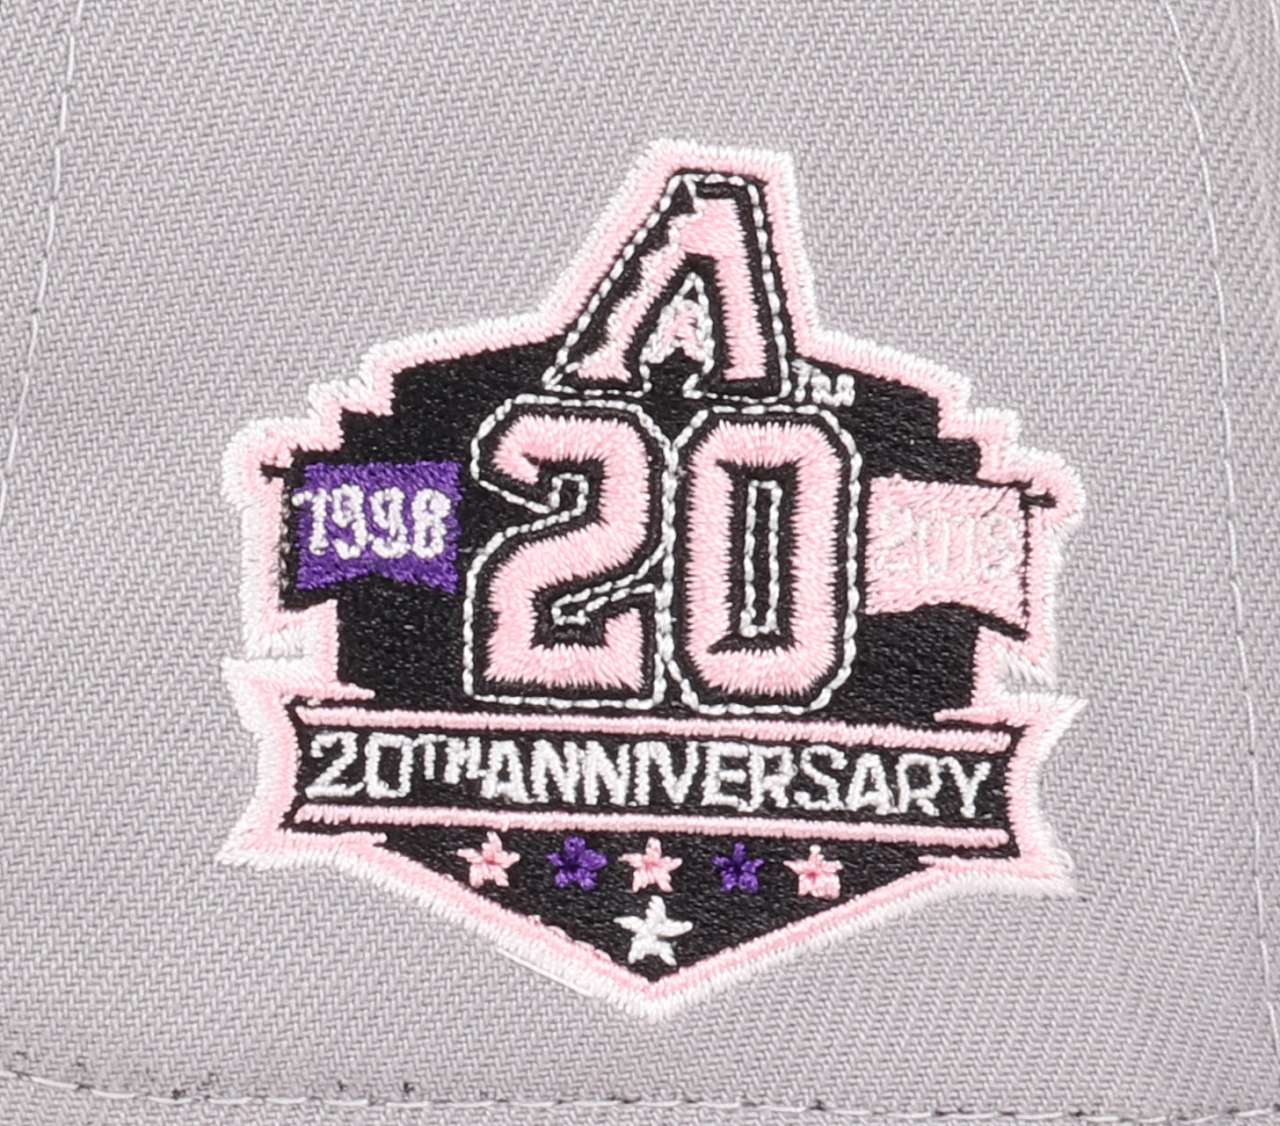 Arizona Diamondbacks MLB  20th Anniversary Sidepatch Gray Black 9Forty A-Frame Adjustable Cap New Era